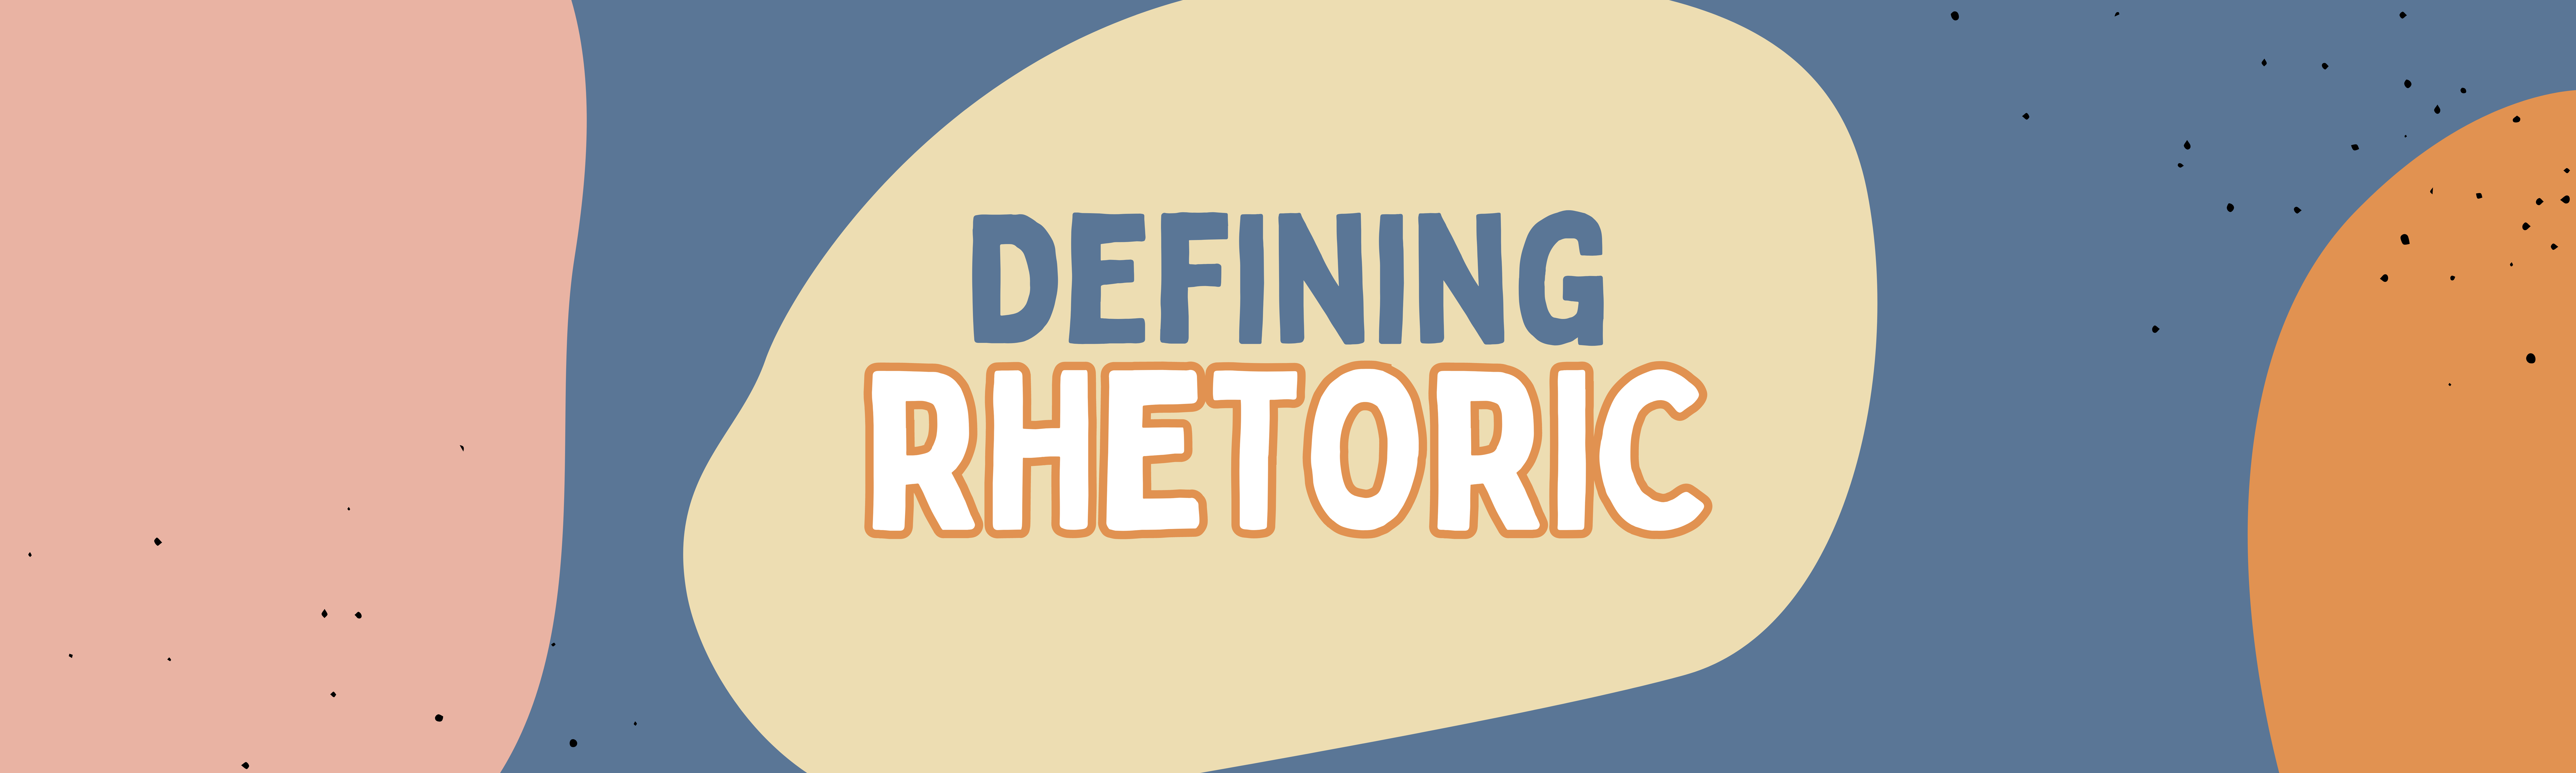 Banner that reads "Defining Rhetoric"